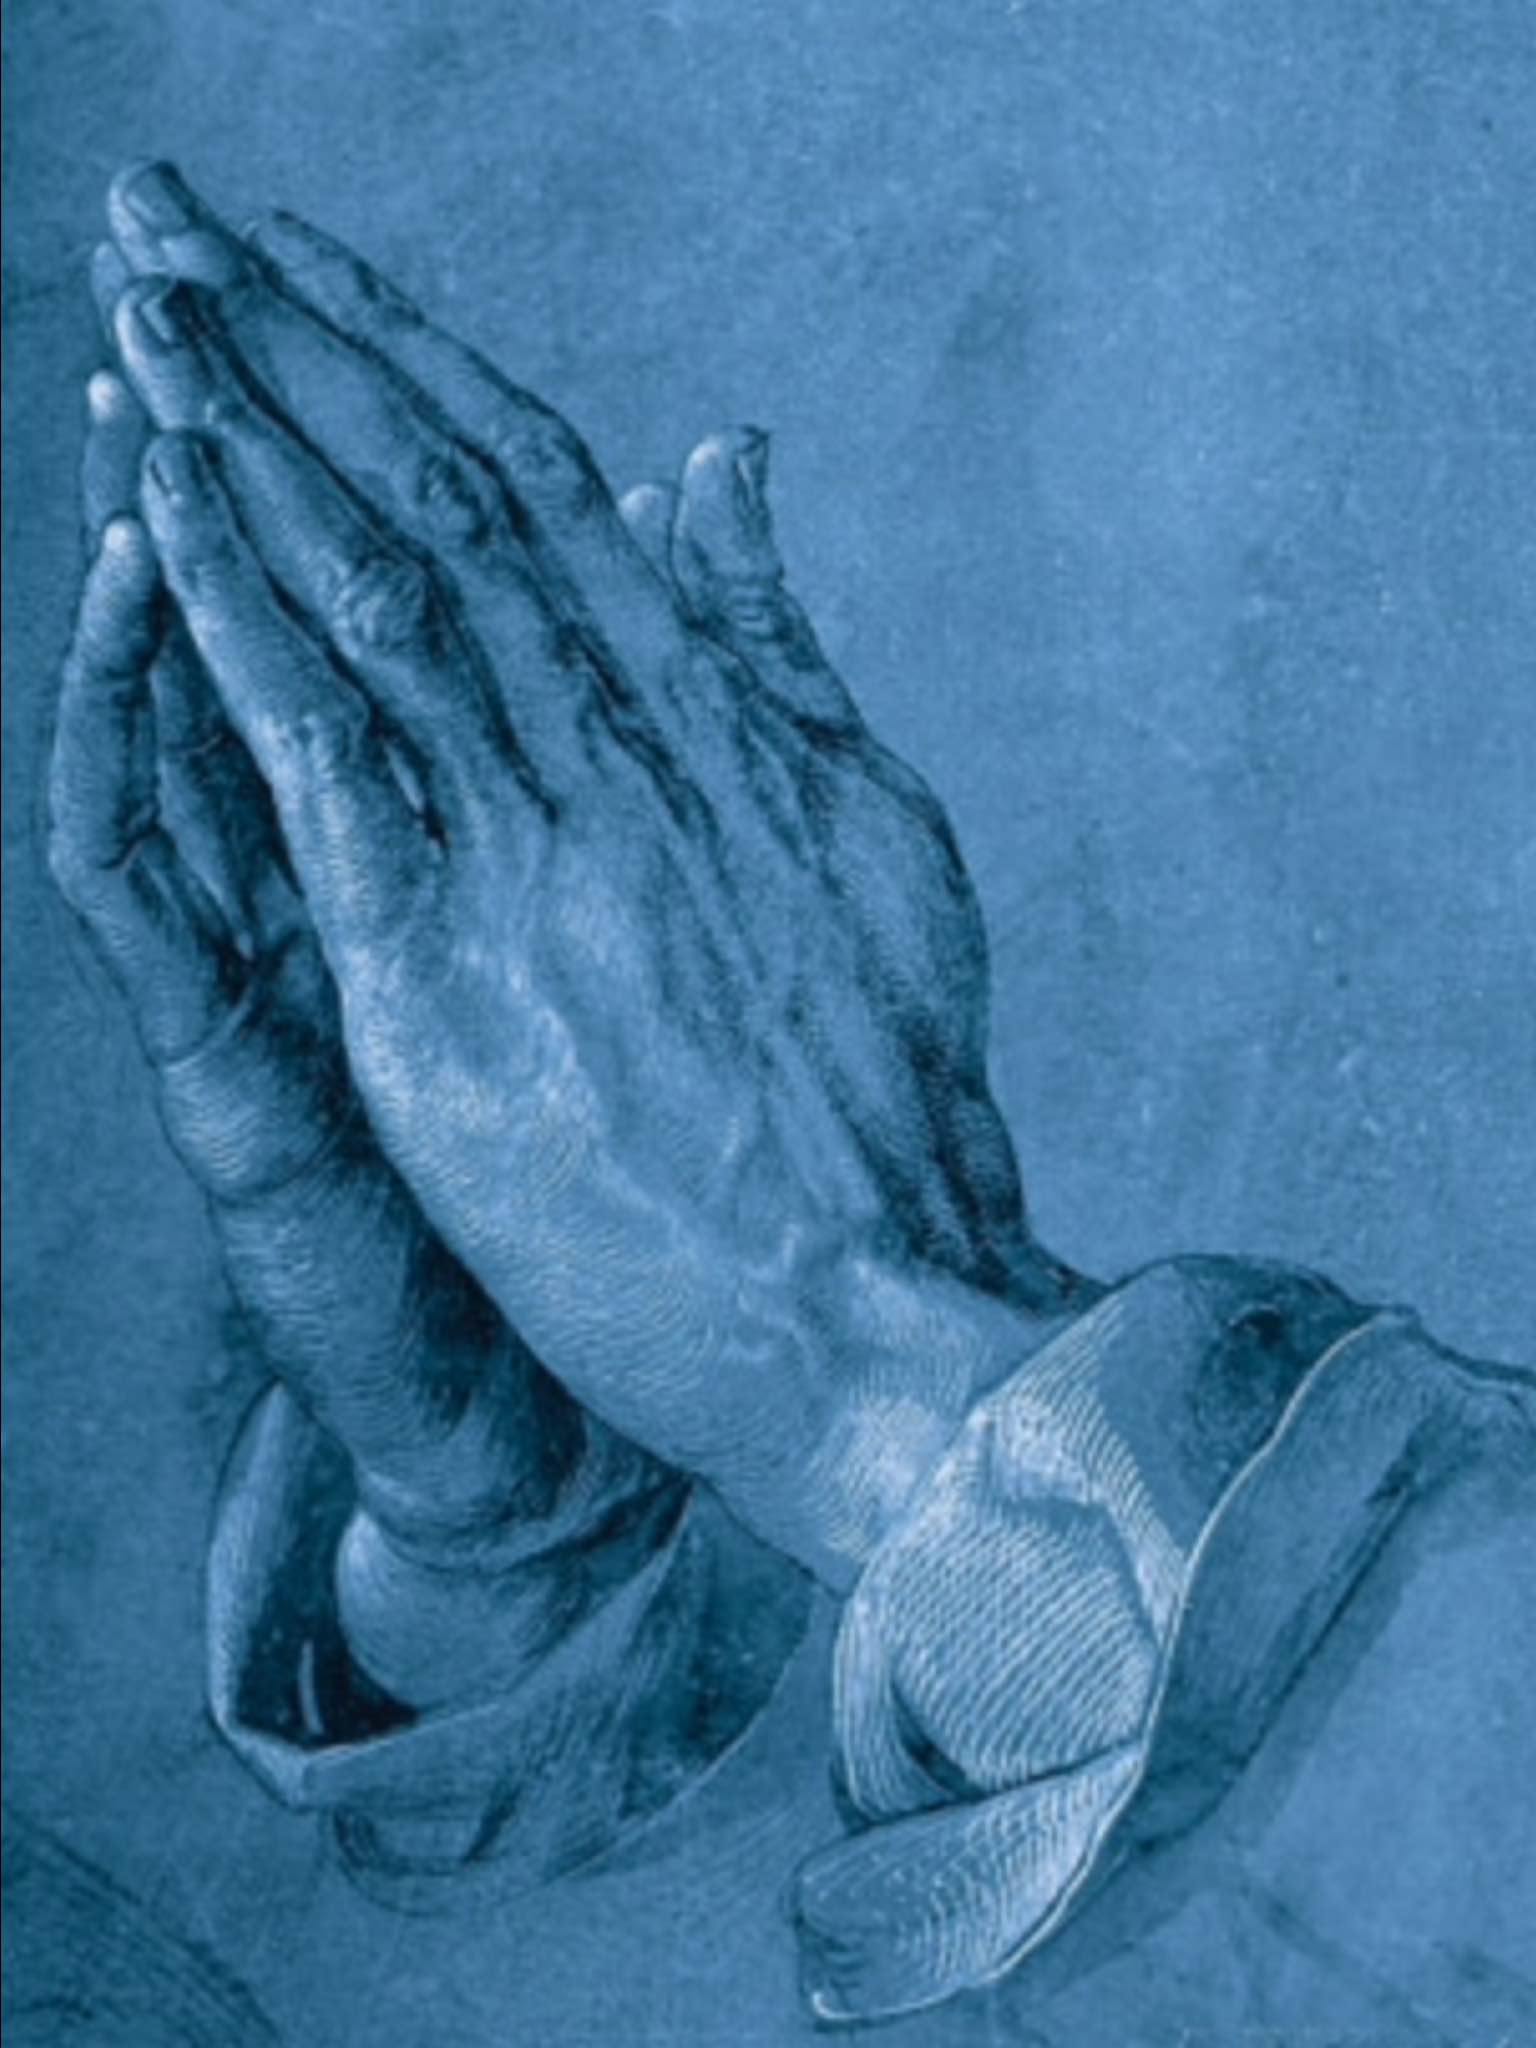 Dürer's Praying Hands - Lutheran Reformation